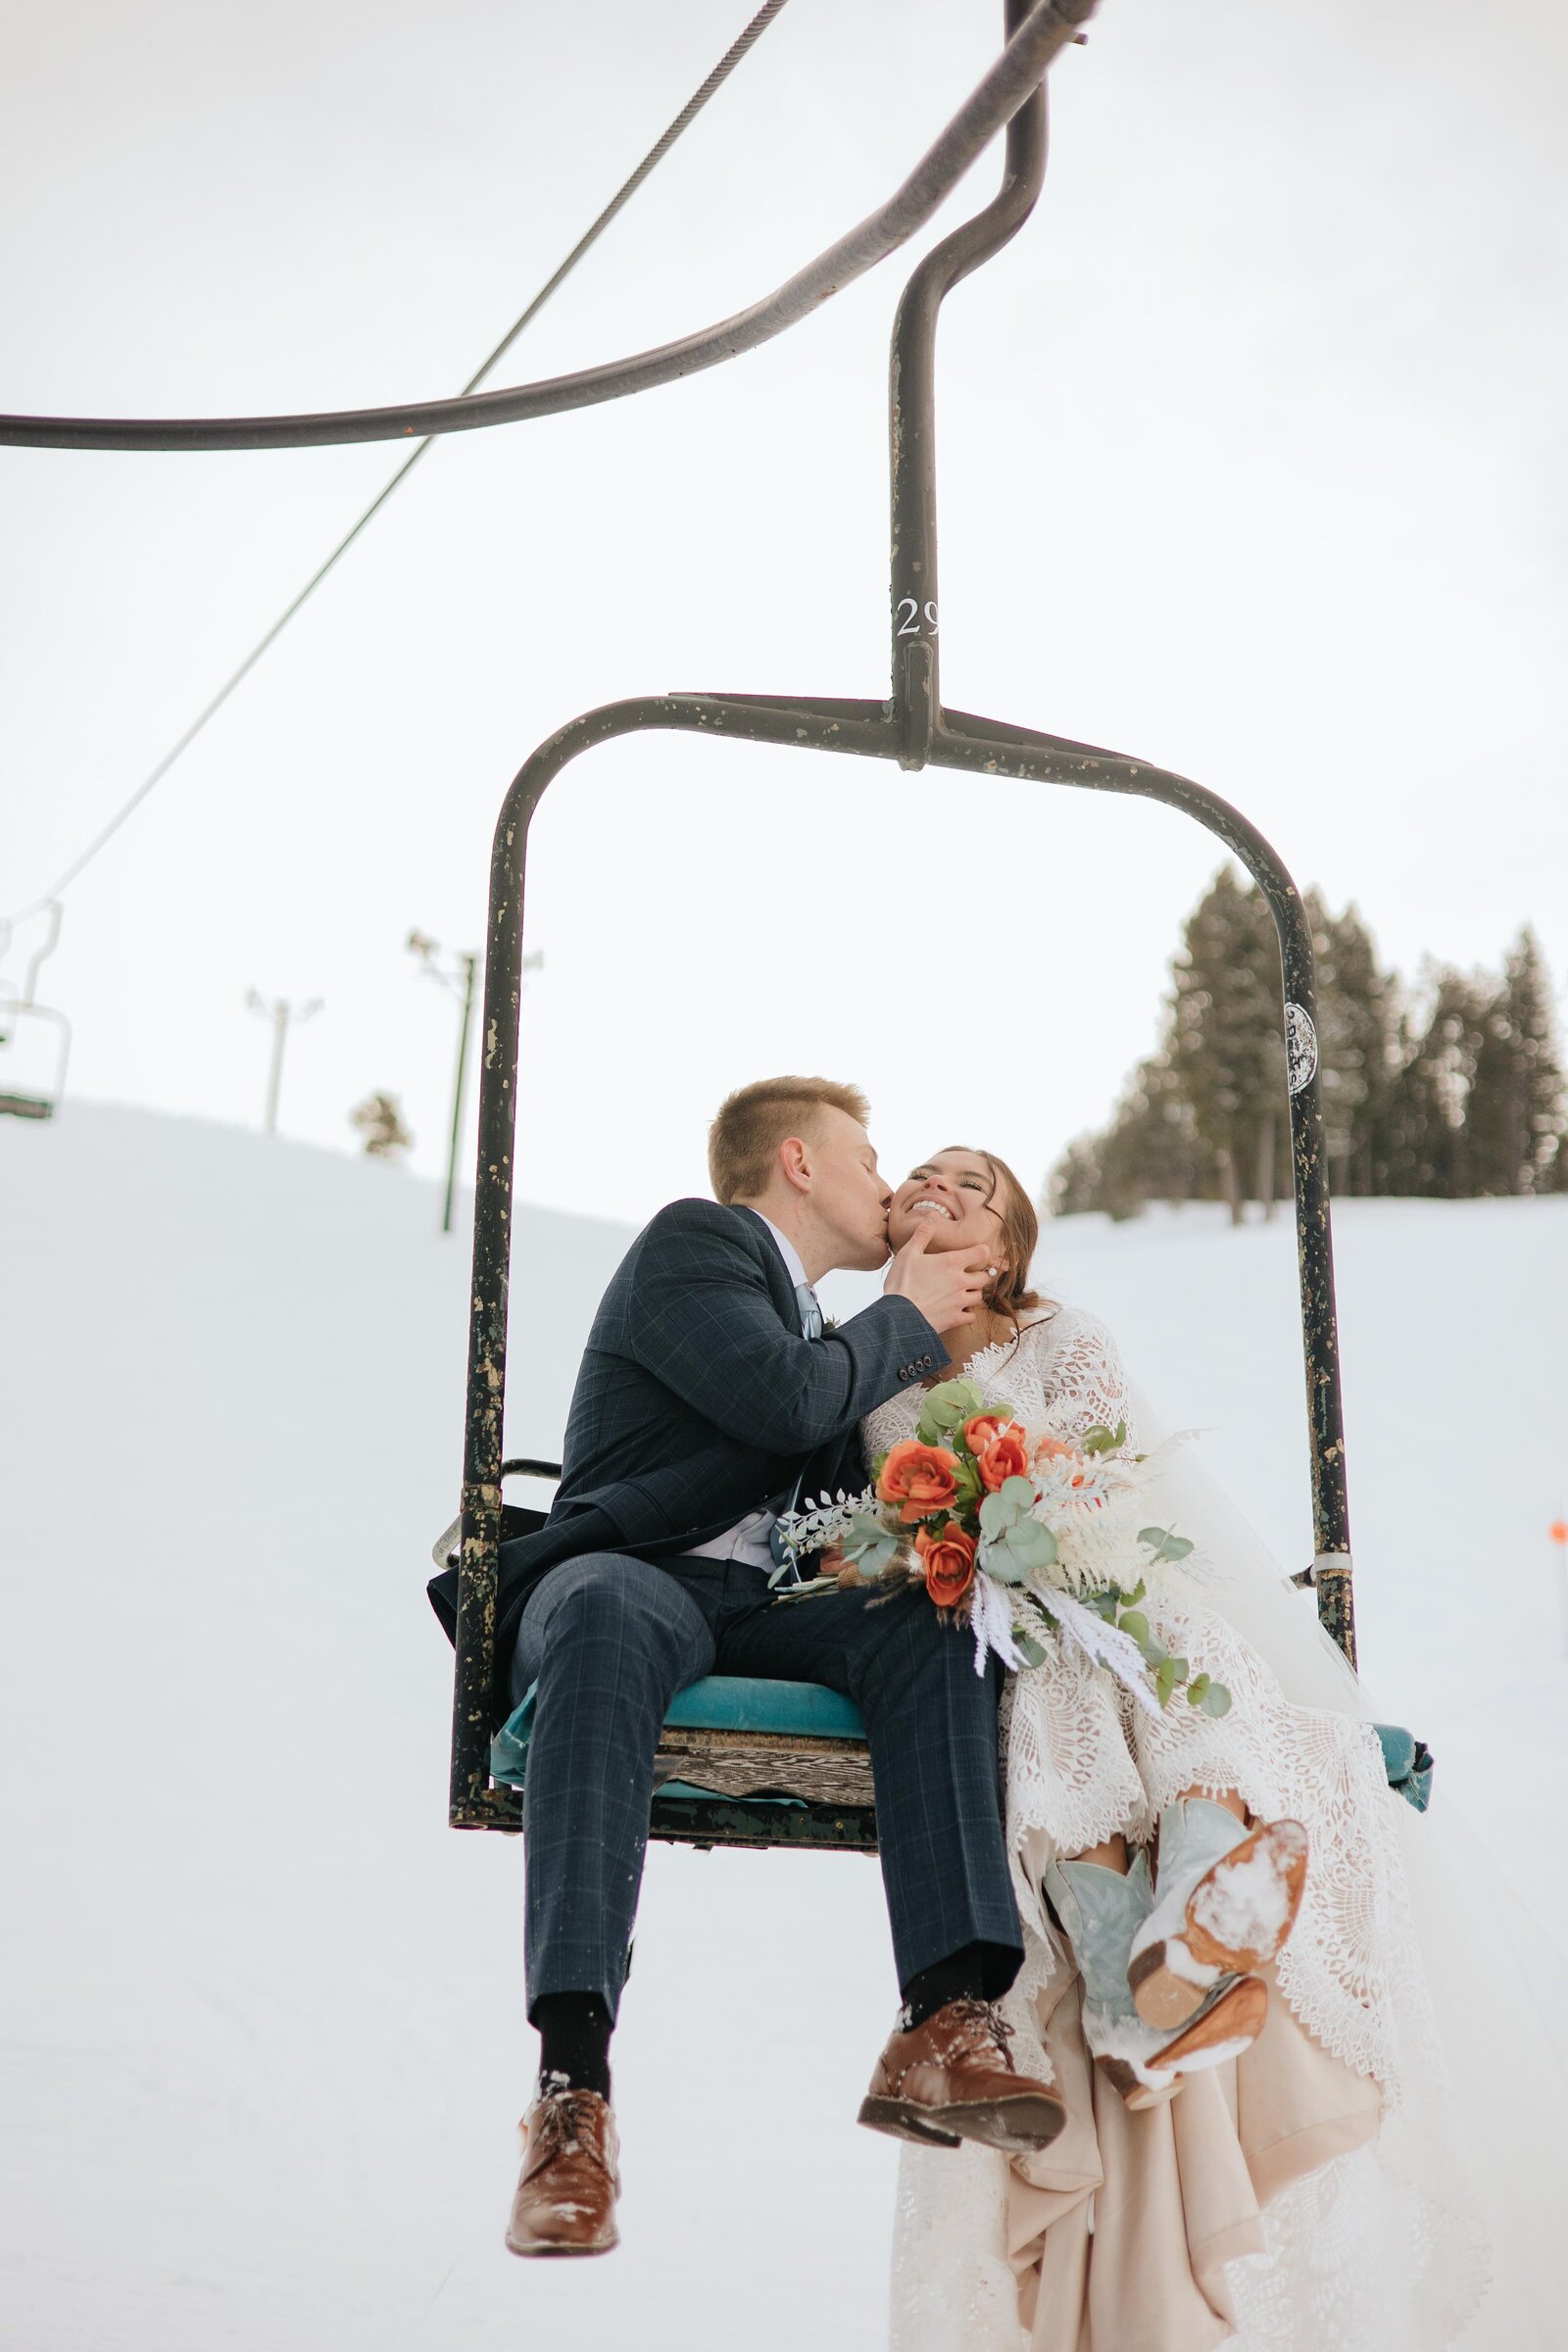 Wedding portrait bride and groom on ski lift